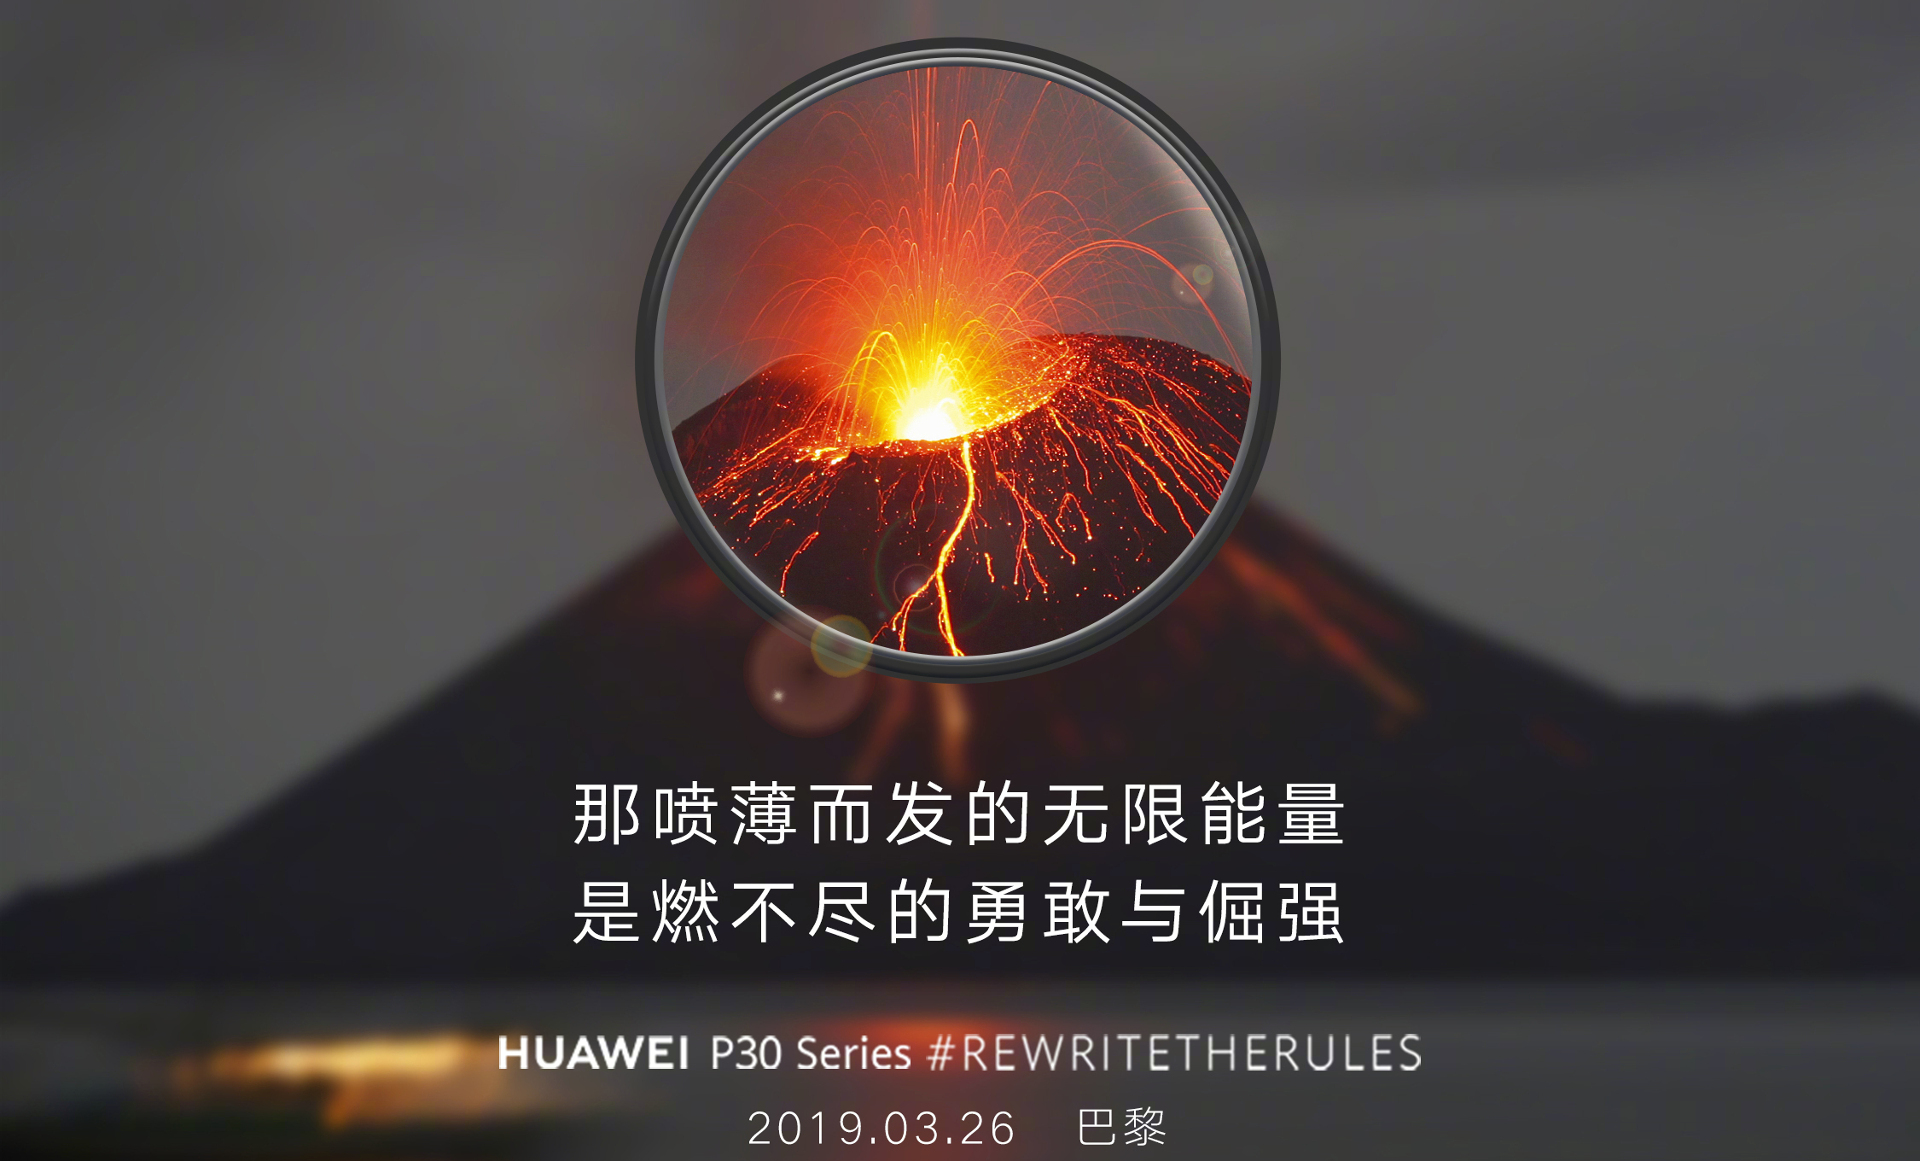 A Huawei P30 promotional image, taken in 2009.